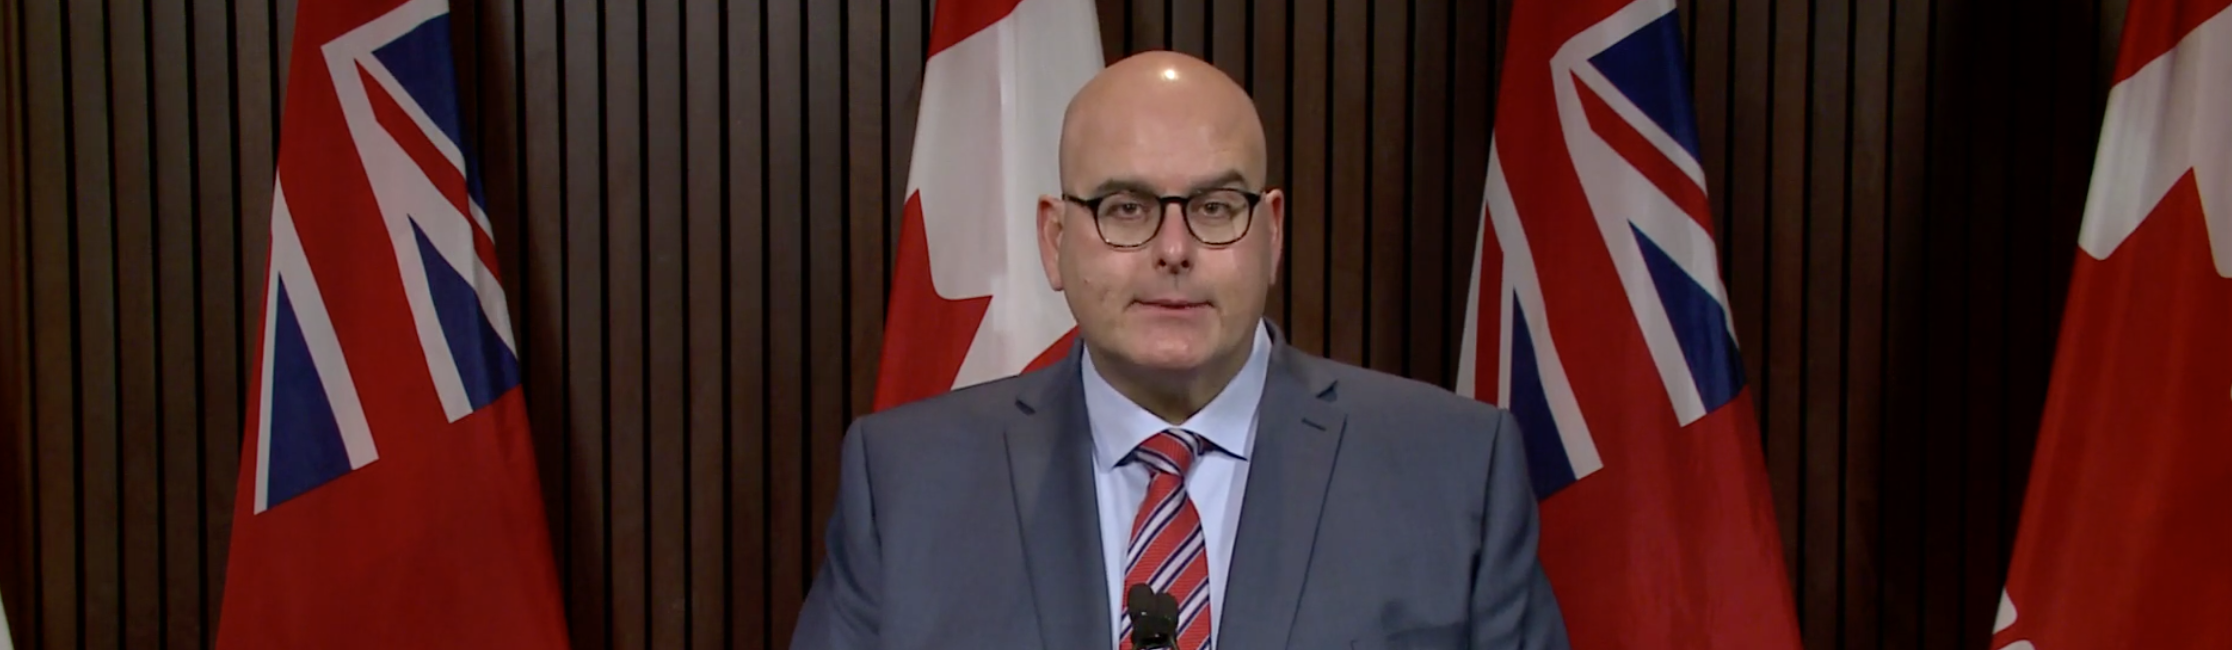 Ontario Liberal leader Steven Del Duca